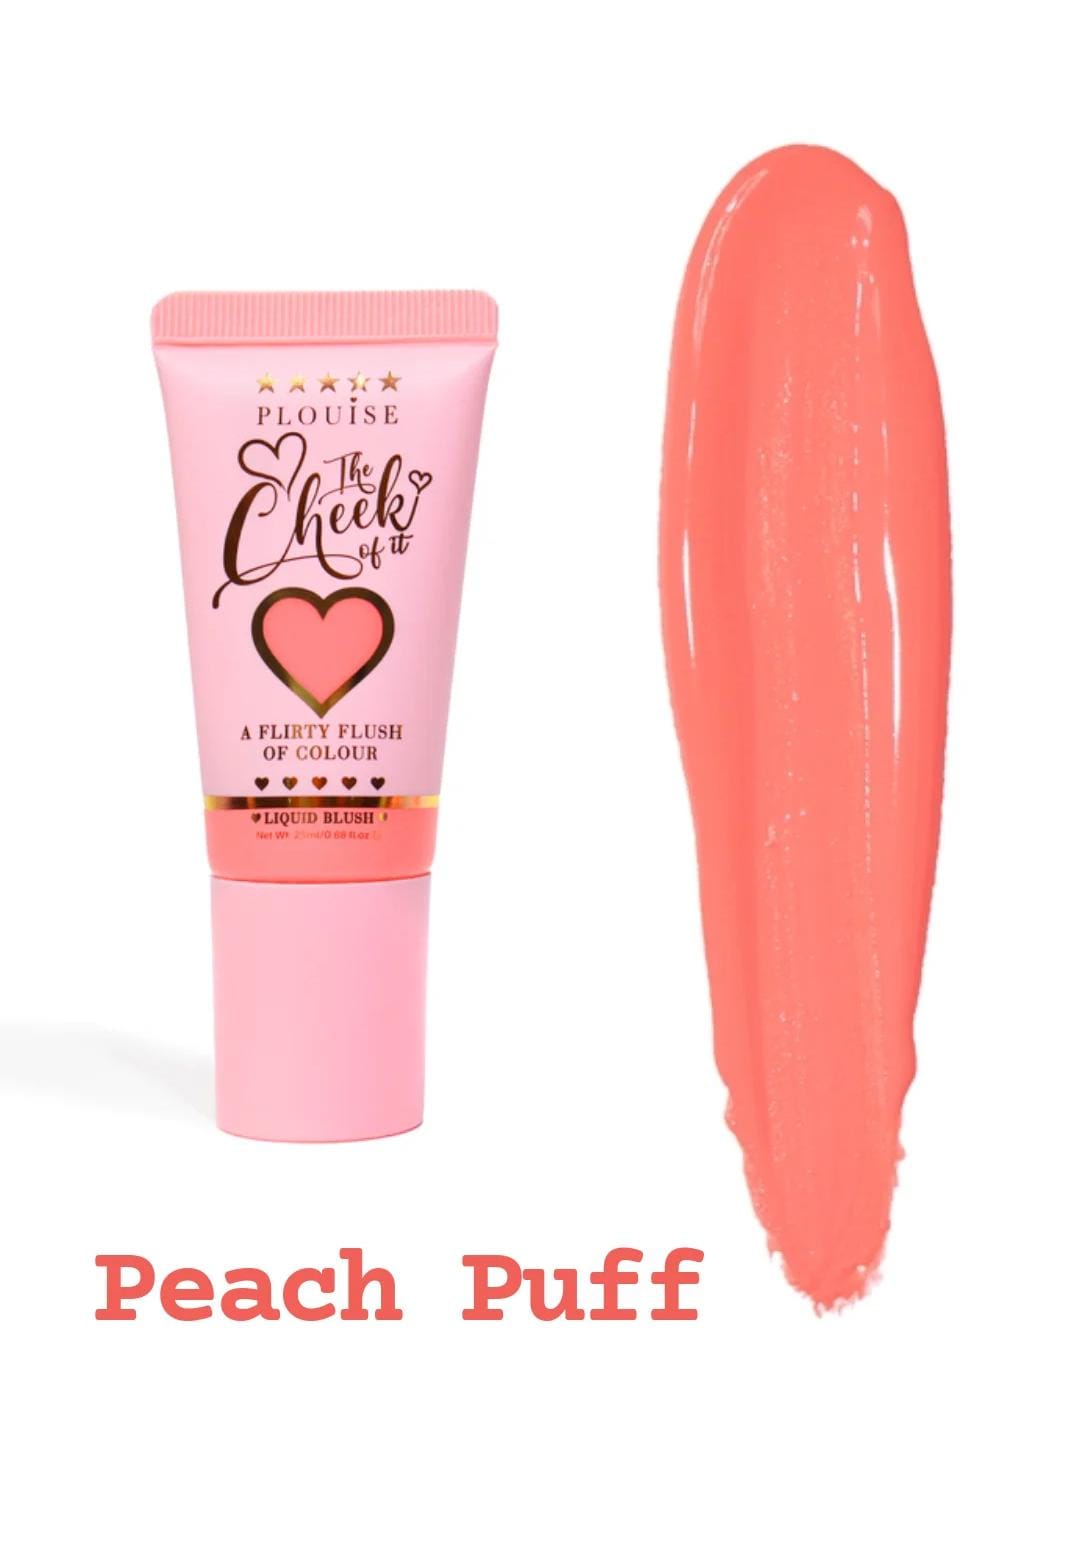 Plouise The Cheek of it - Liquid Blush